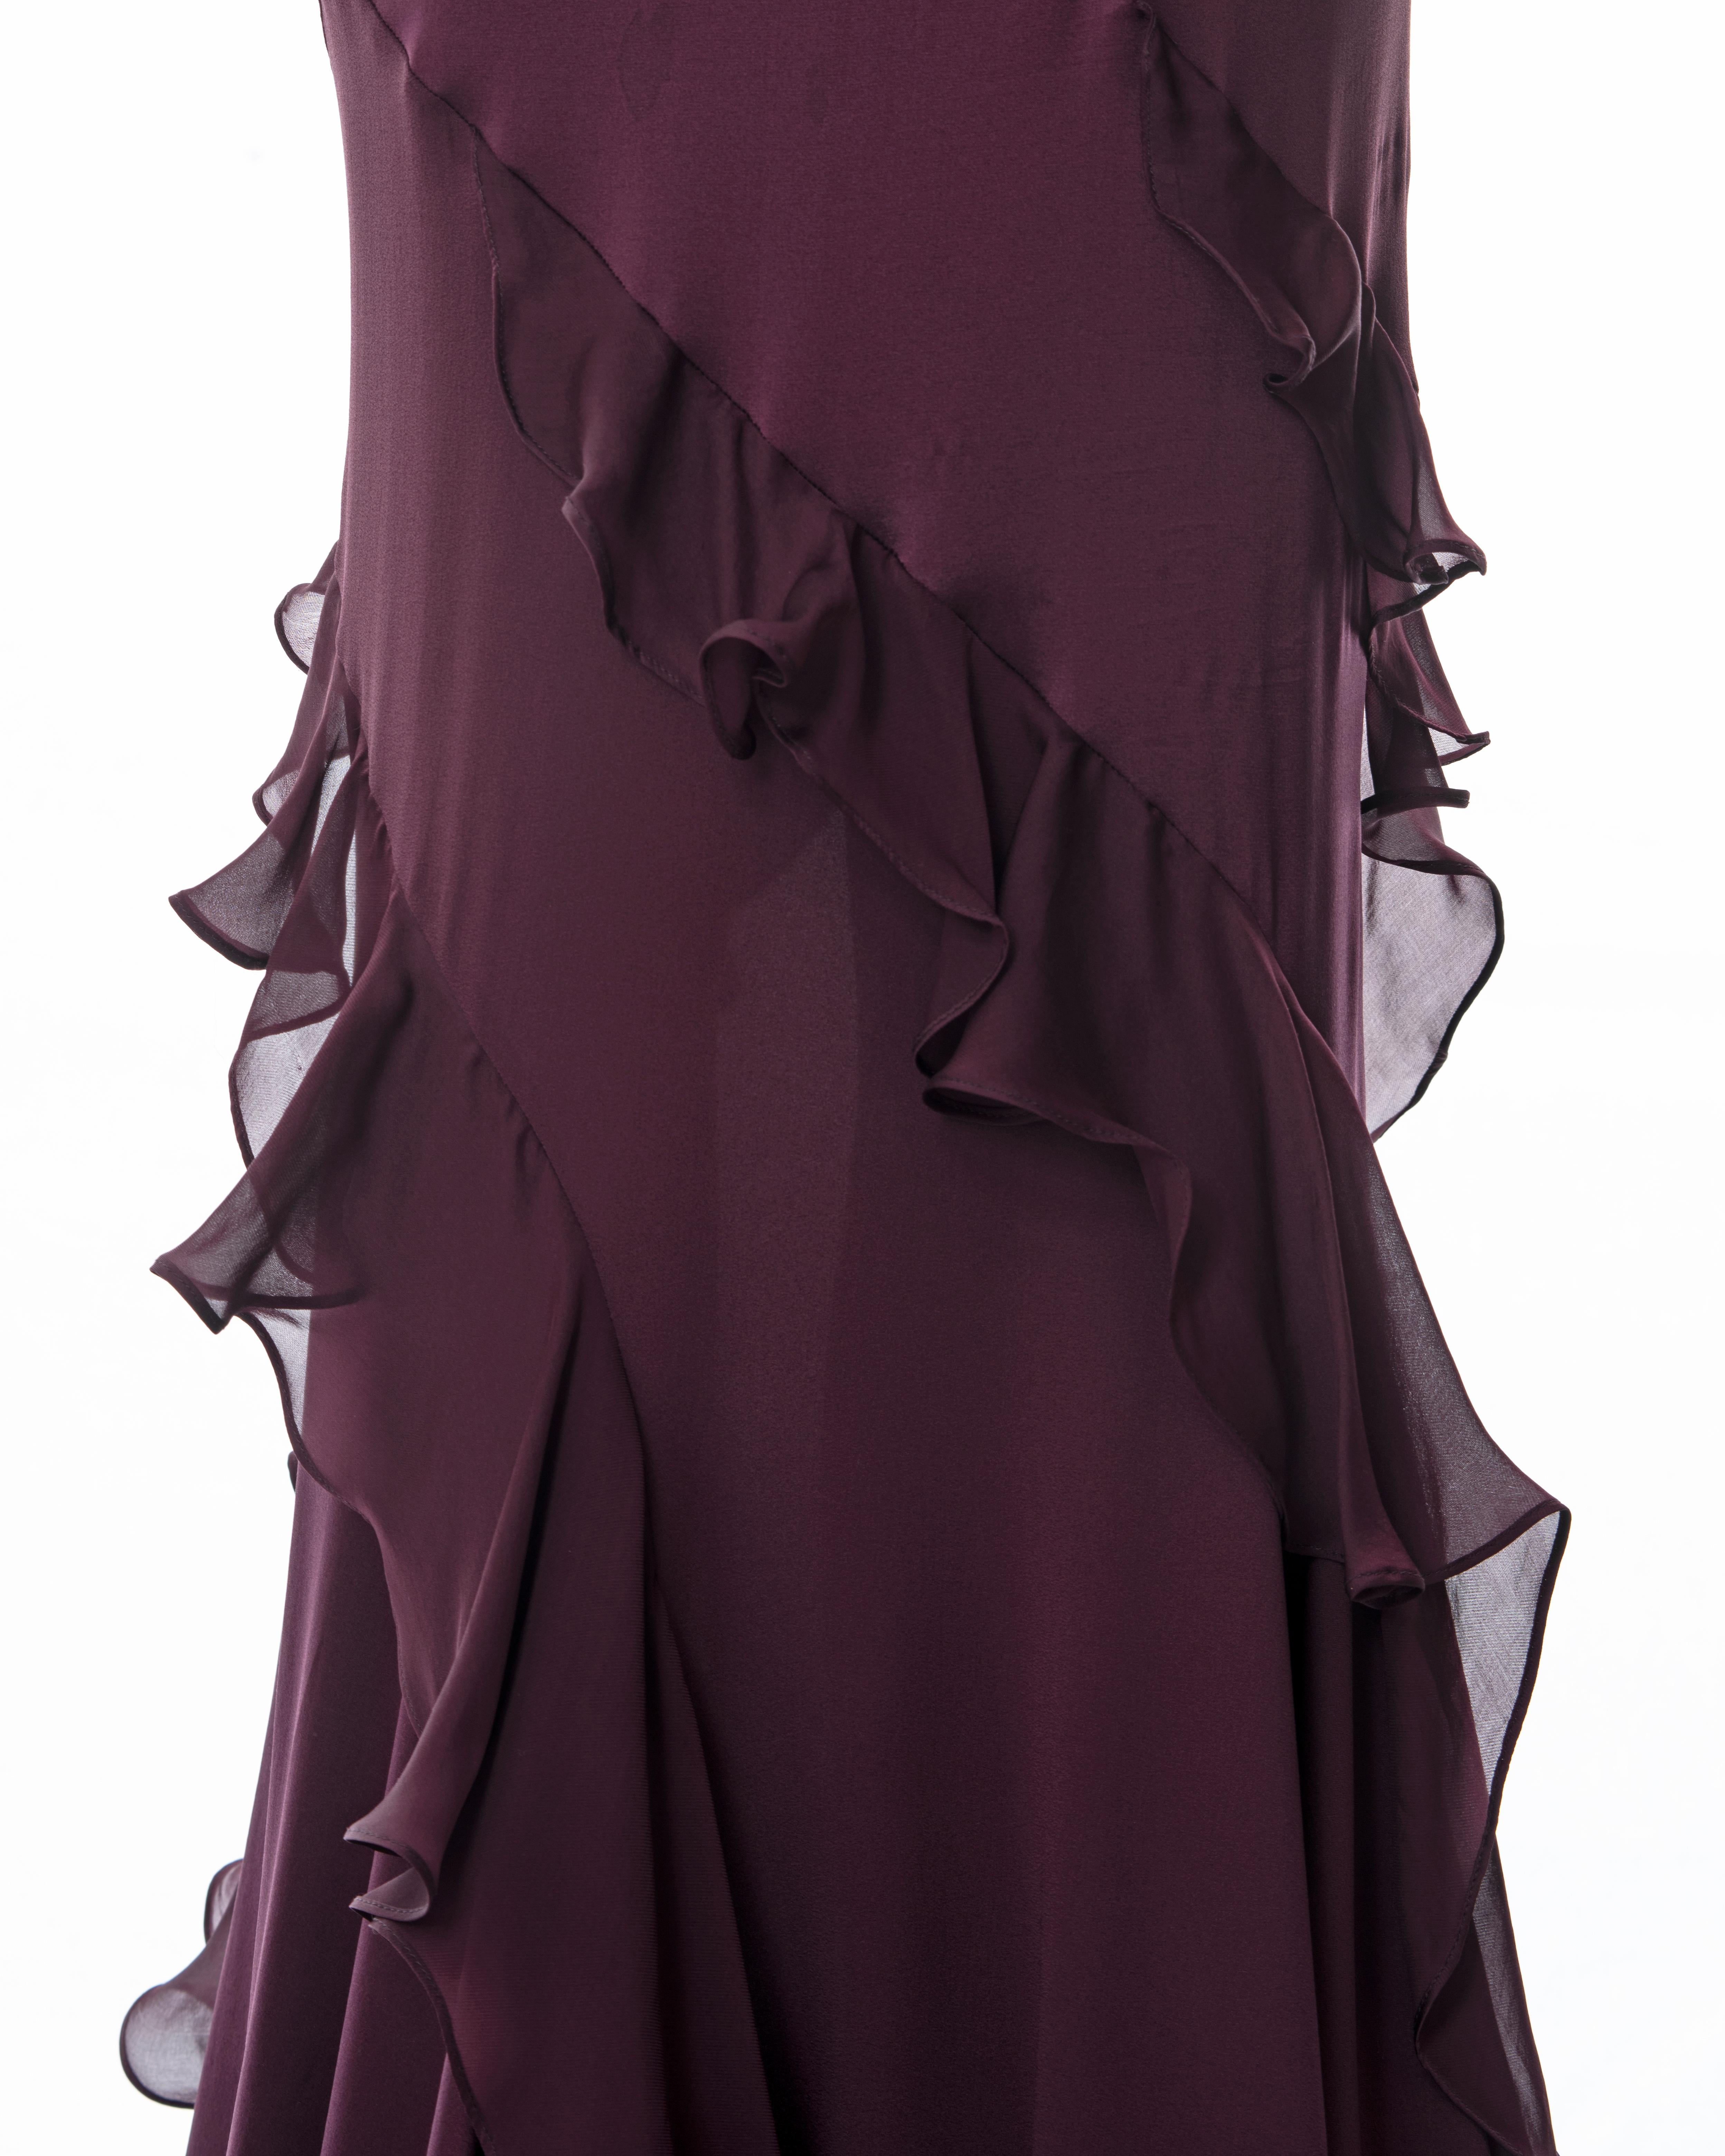 Roberto Cavalli purple silk bias cut evening dress with train, fw 2004 5